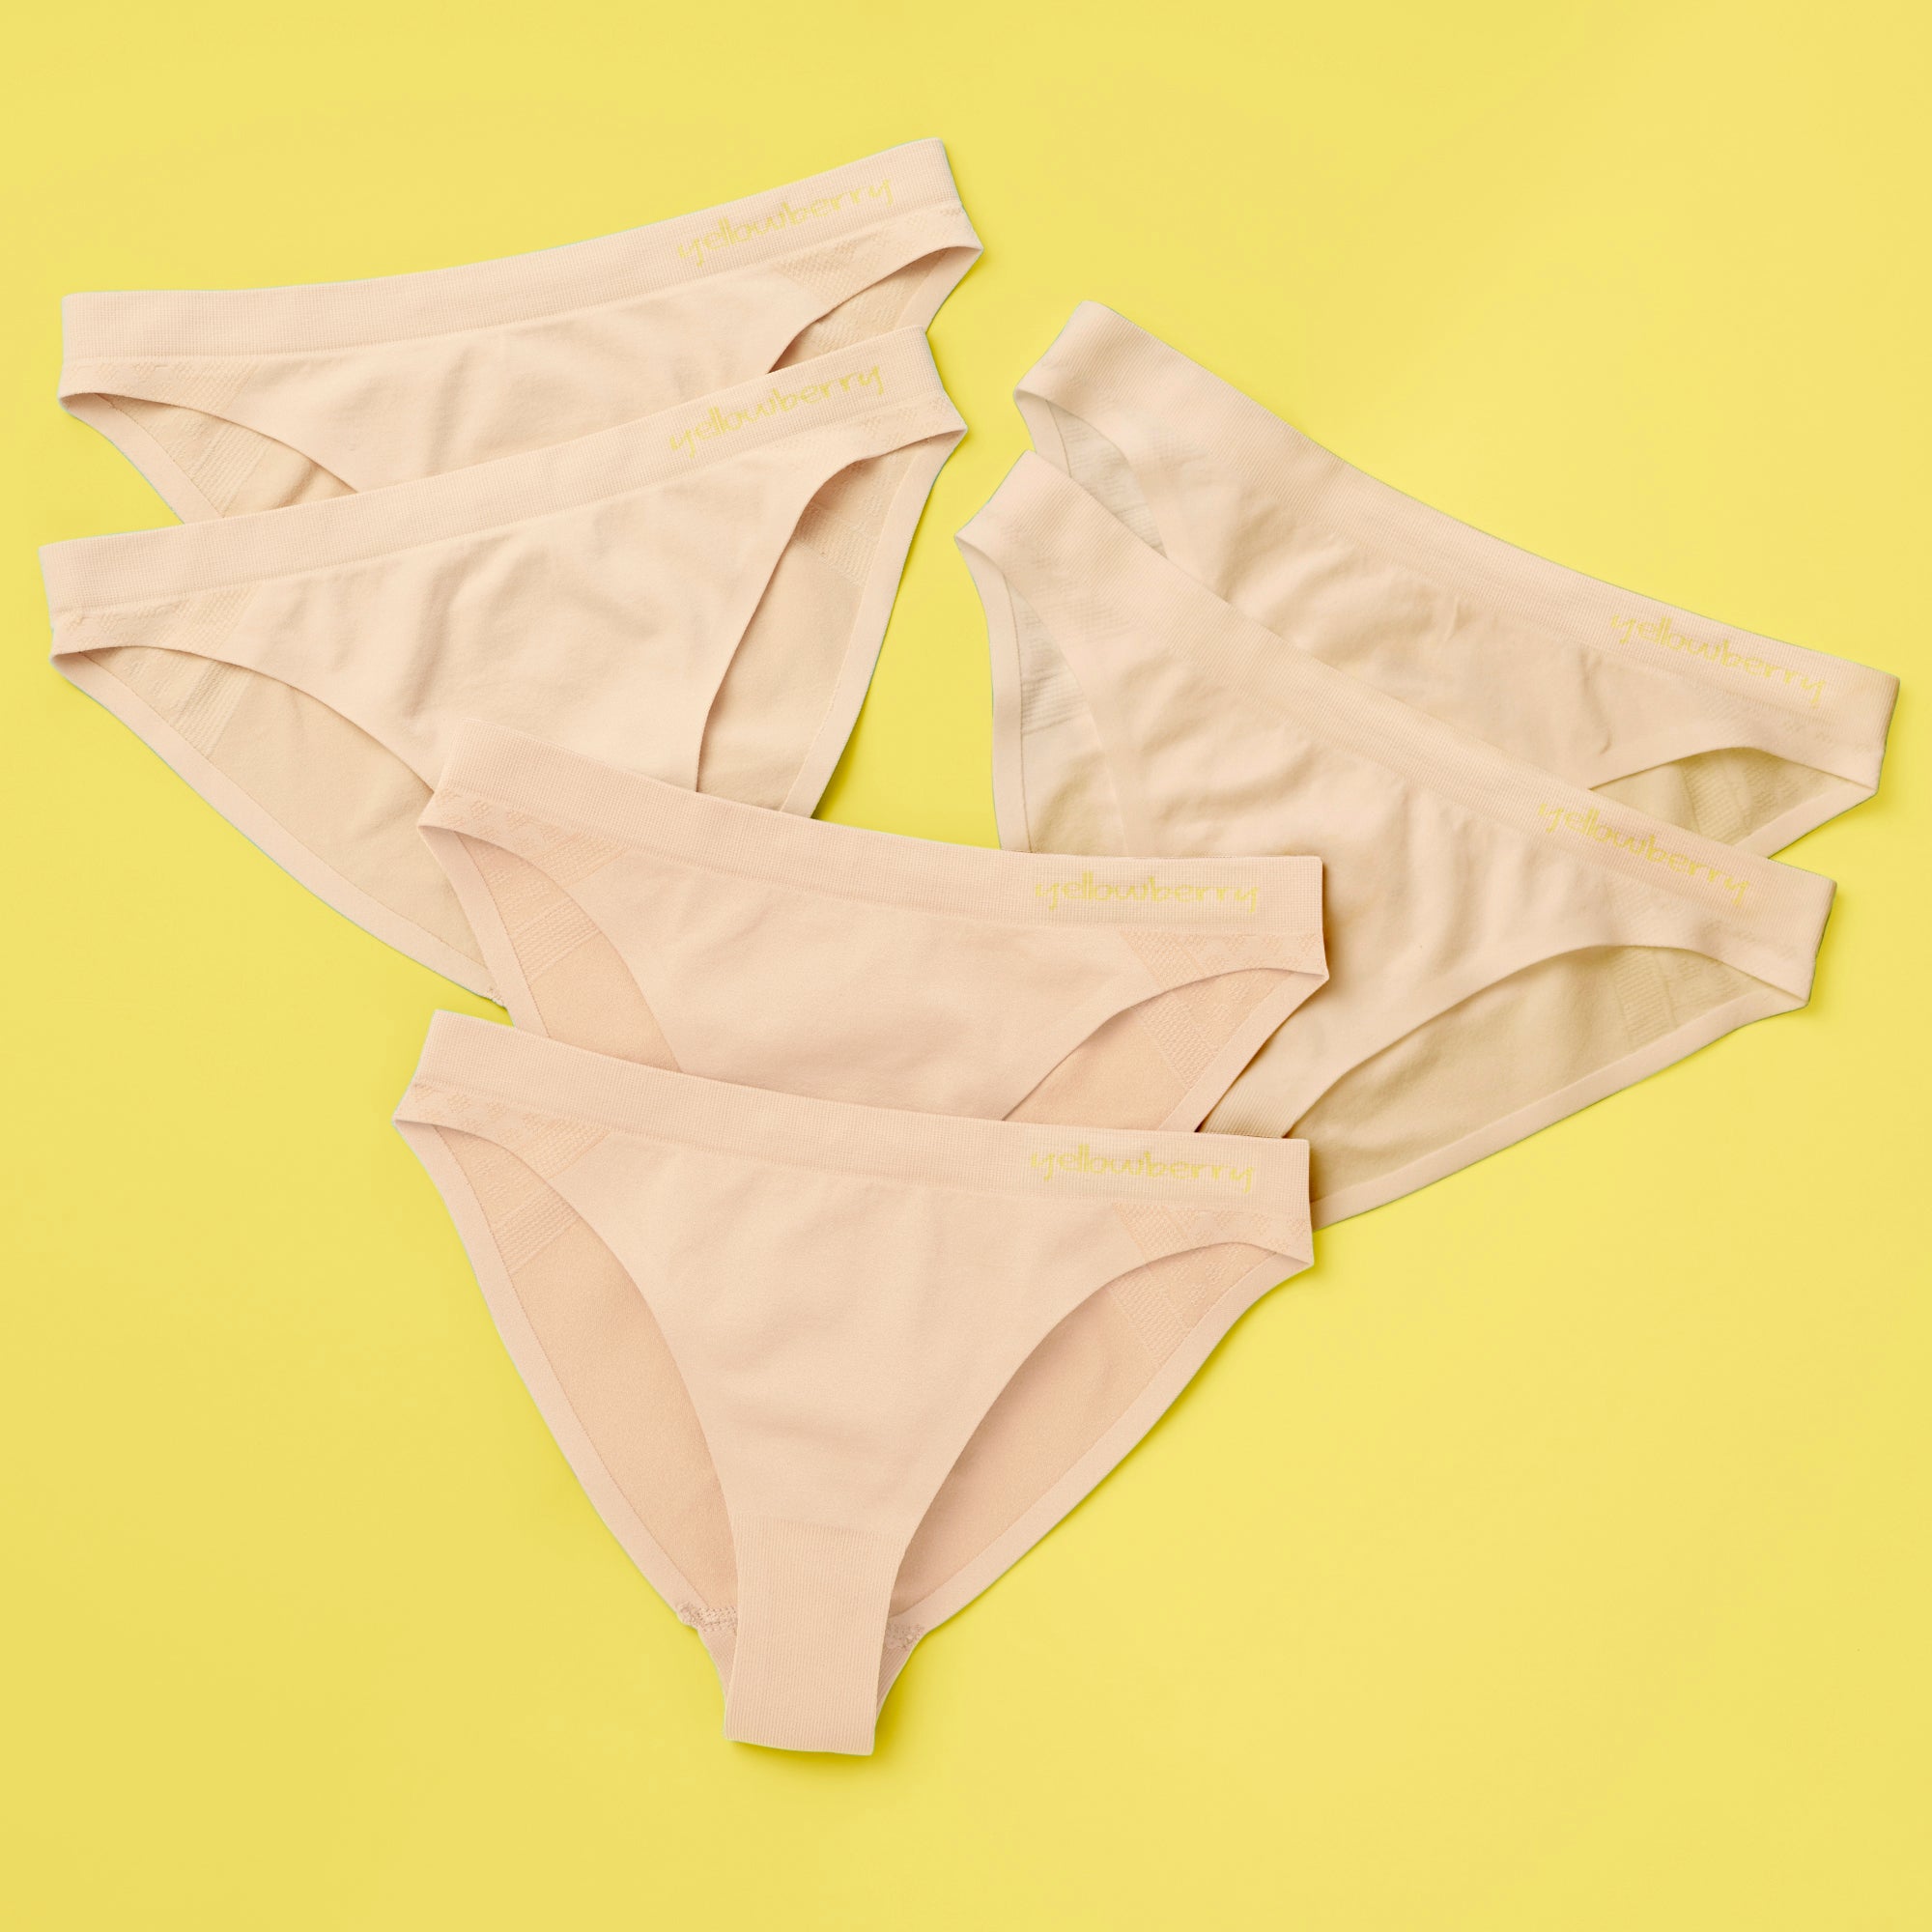 Yellowberry Girls 6pk Quality Seamless Hipster Brief Underwear